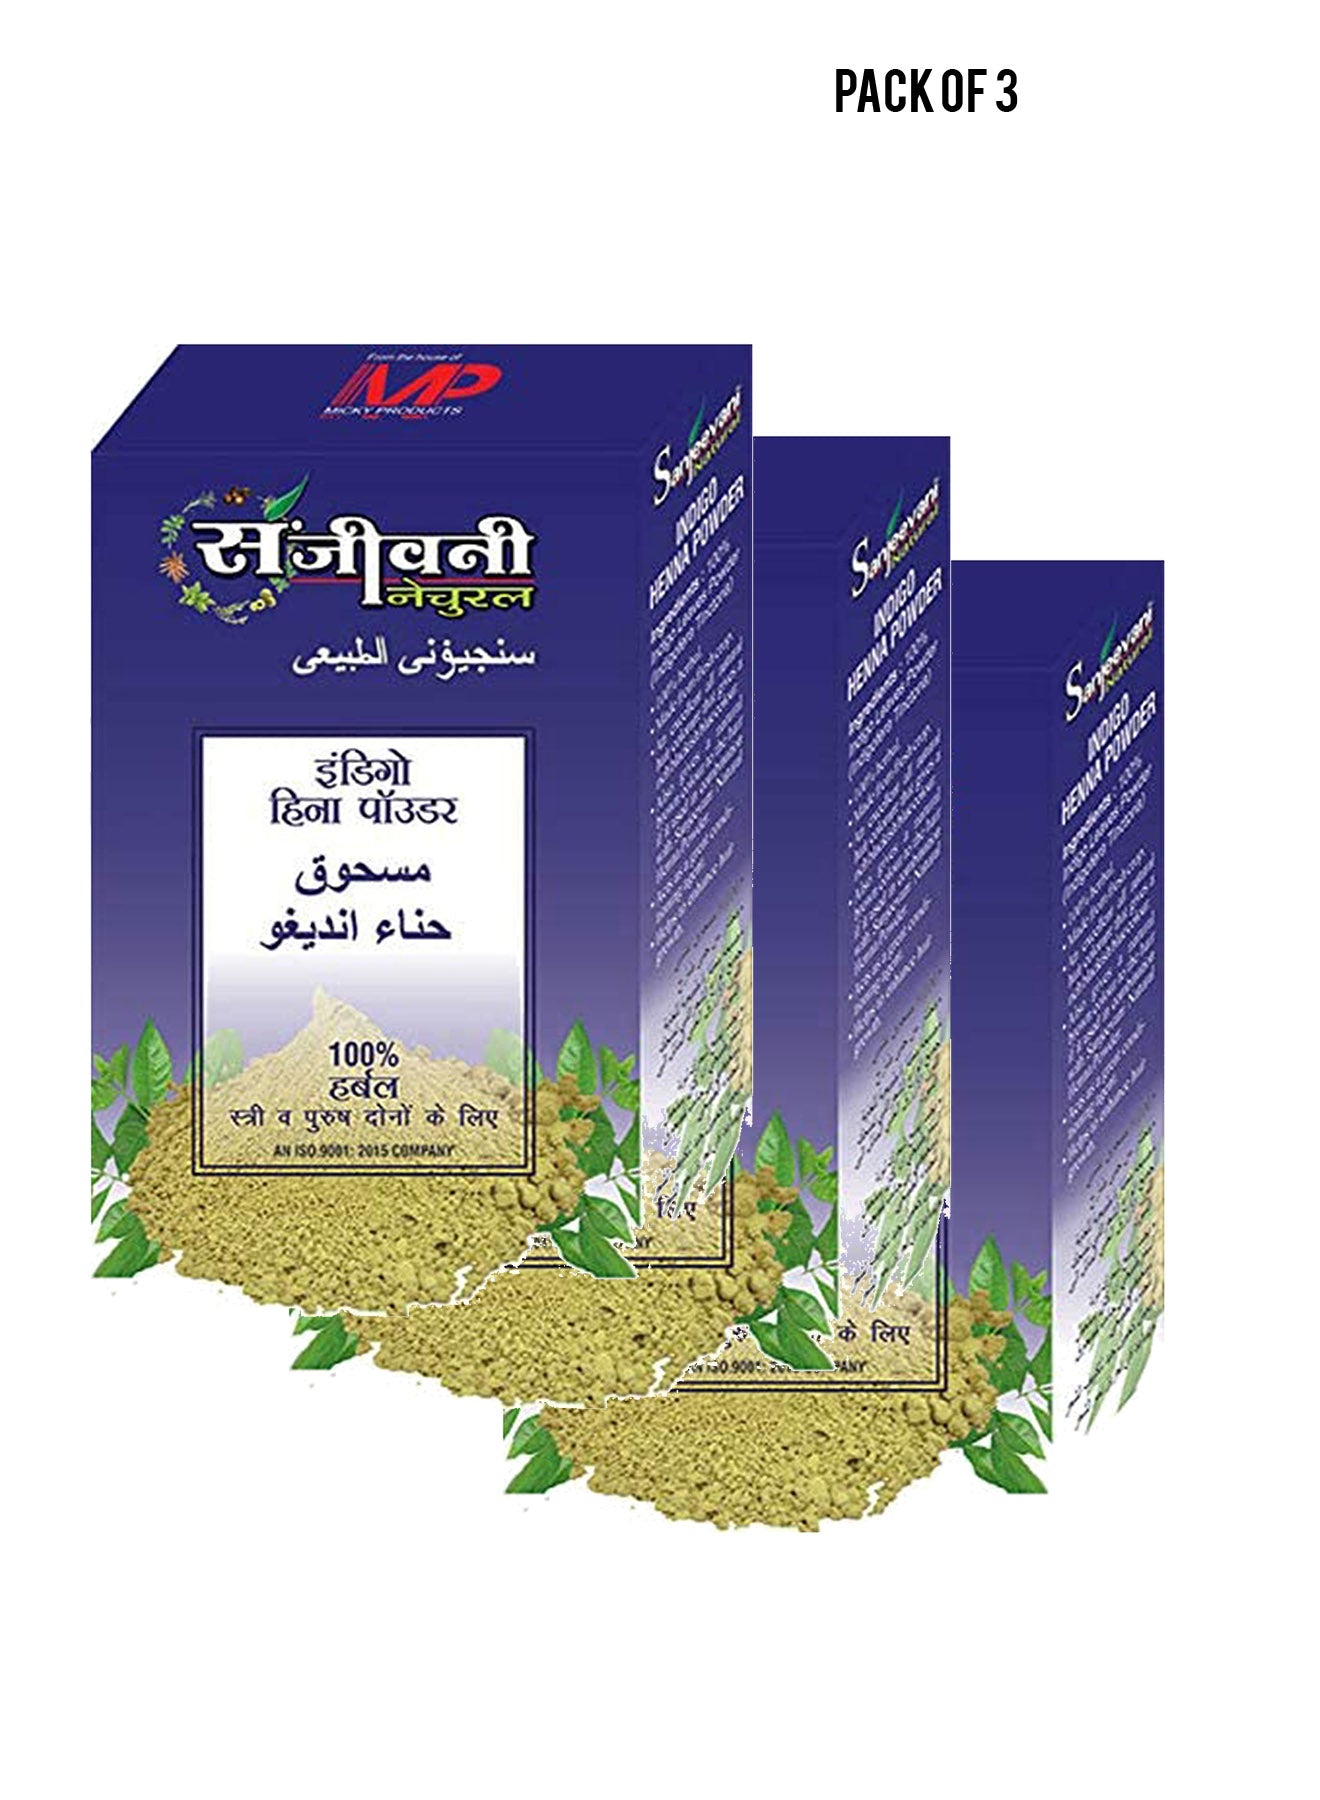 Sanjeevani Hair Powder Indigo Leaf PowderNeelamari Powder 100gm Value Pack of 3 